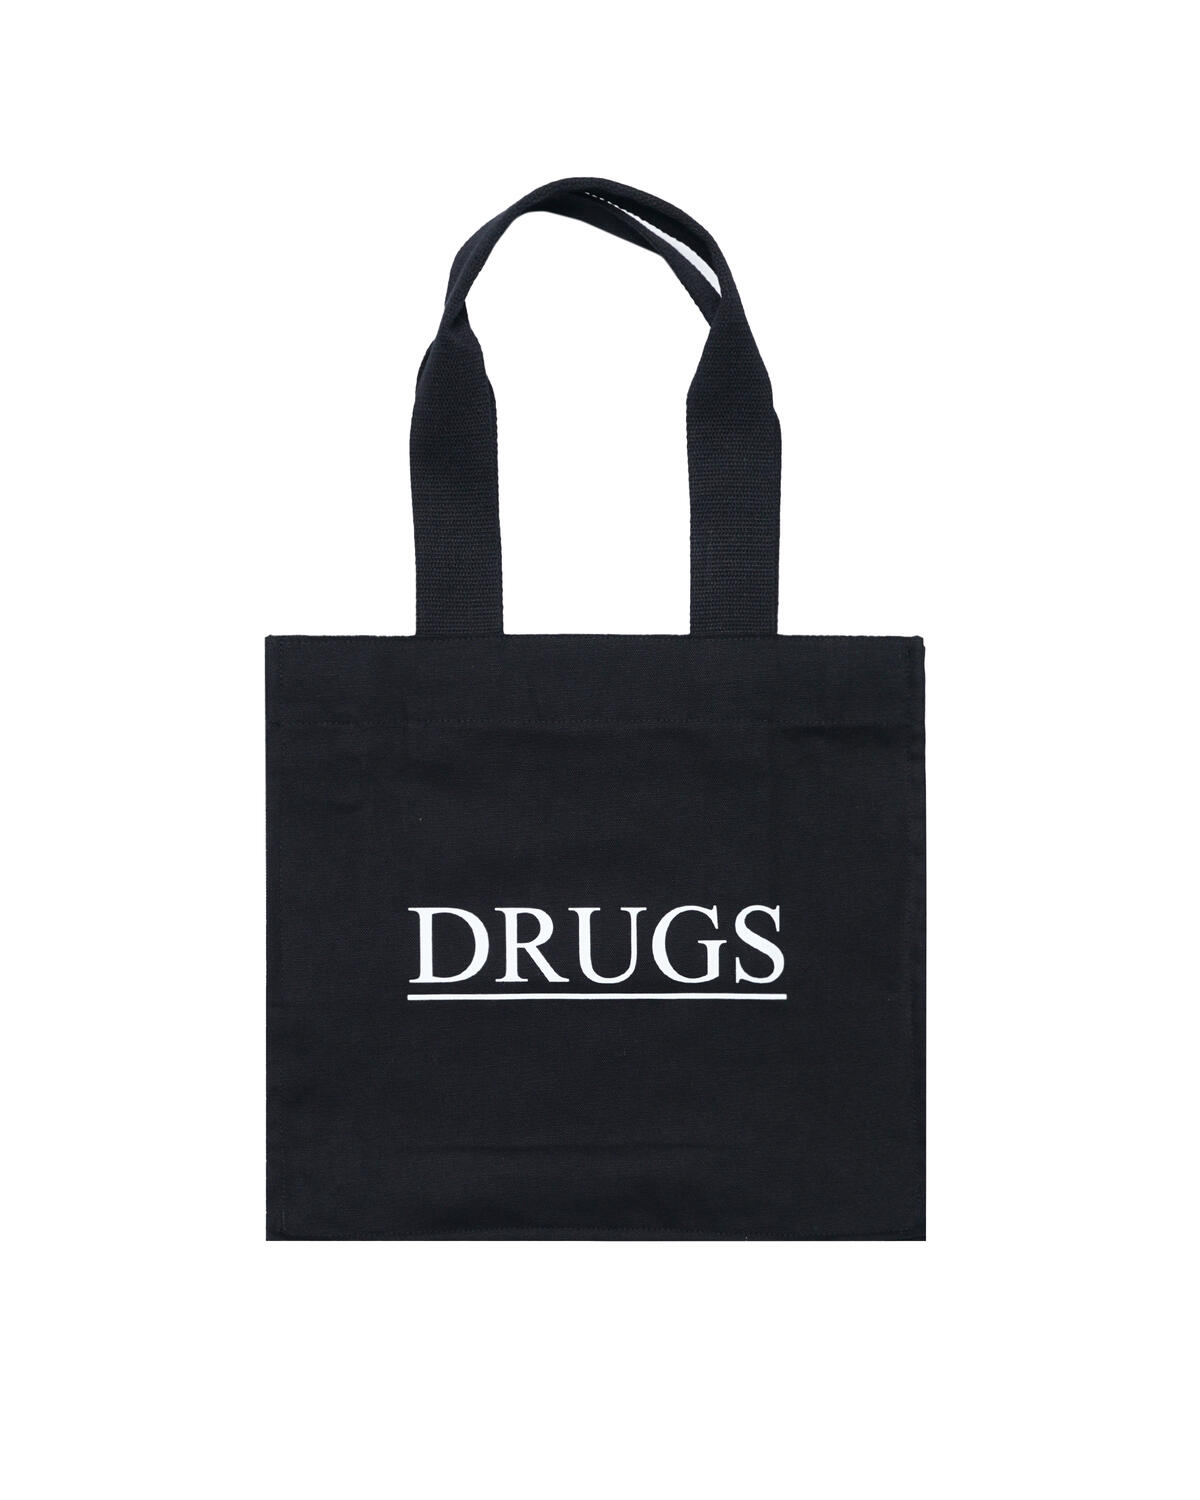 Supreme Supreme x Louis Vuitton Christoper Black Backpack Bag